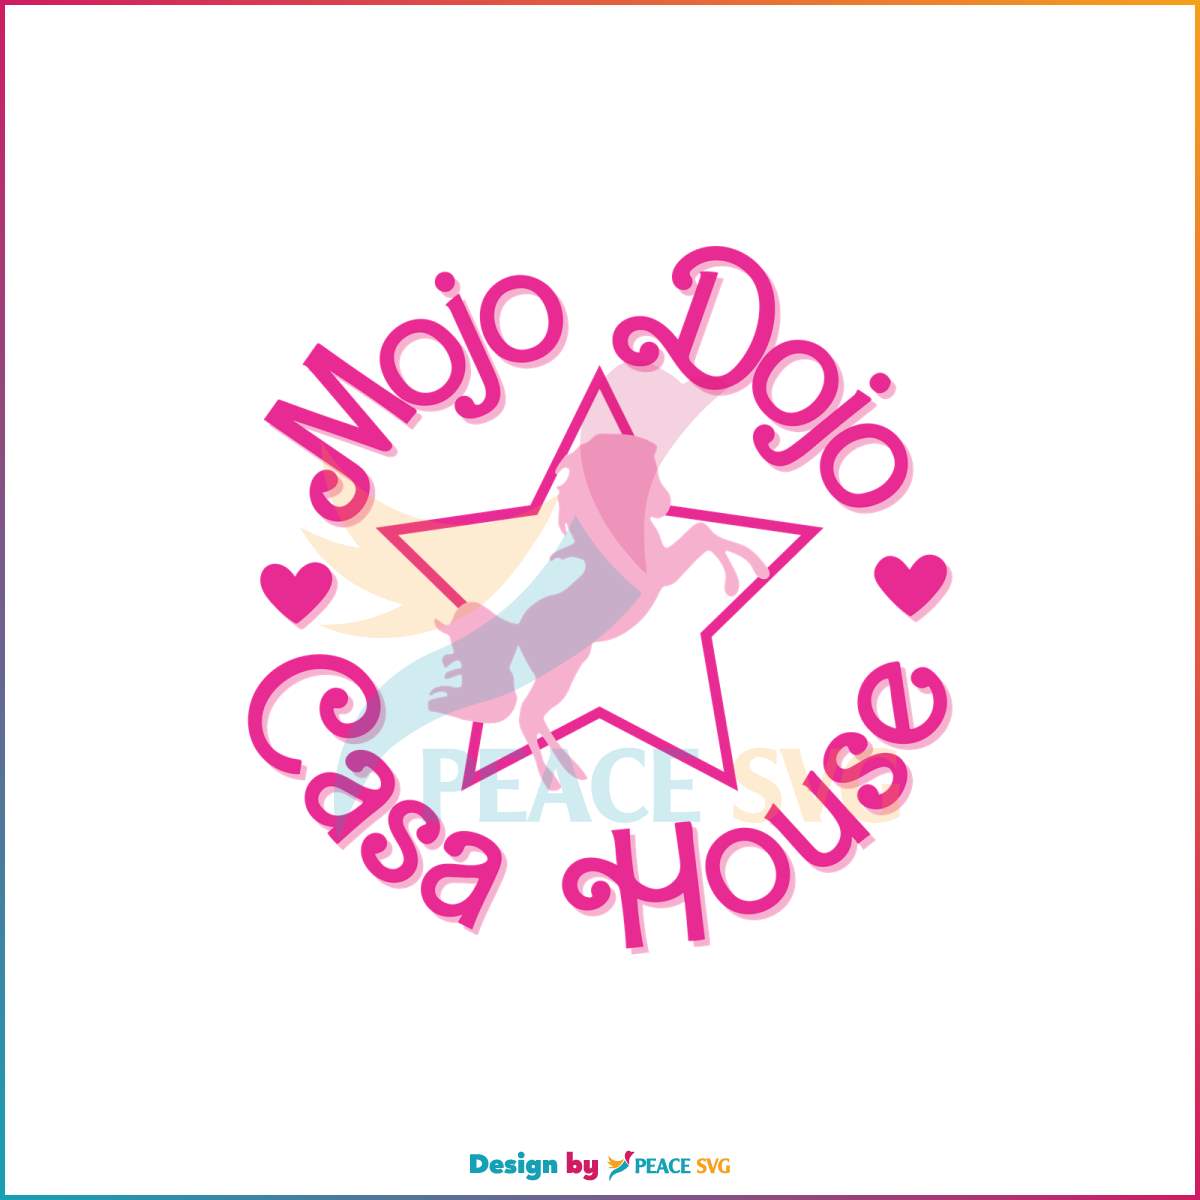 mojo-dojo-casa-house-vintage-style-barbie-movie-svg-file